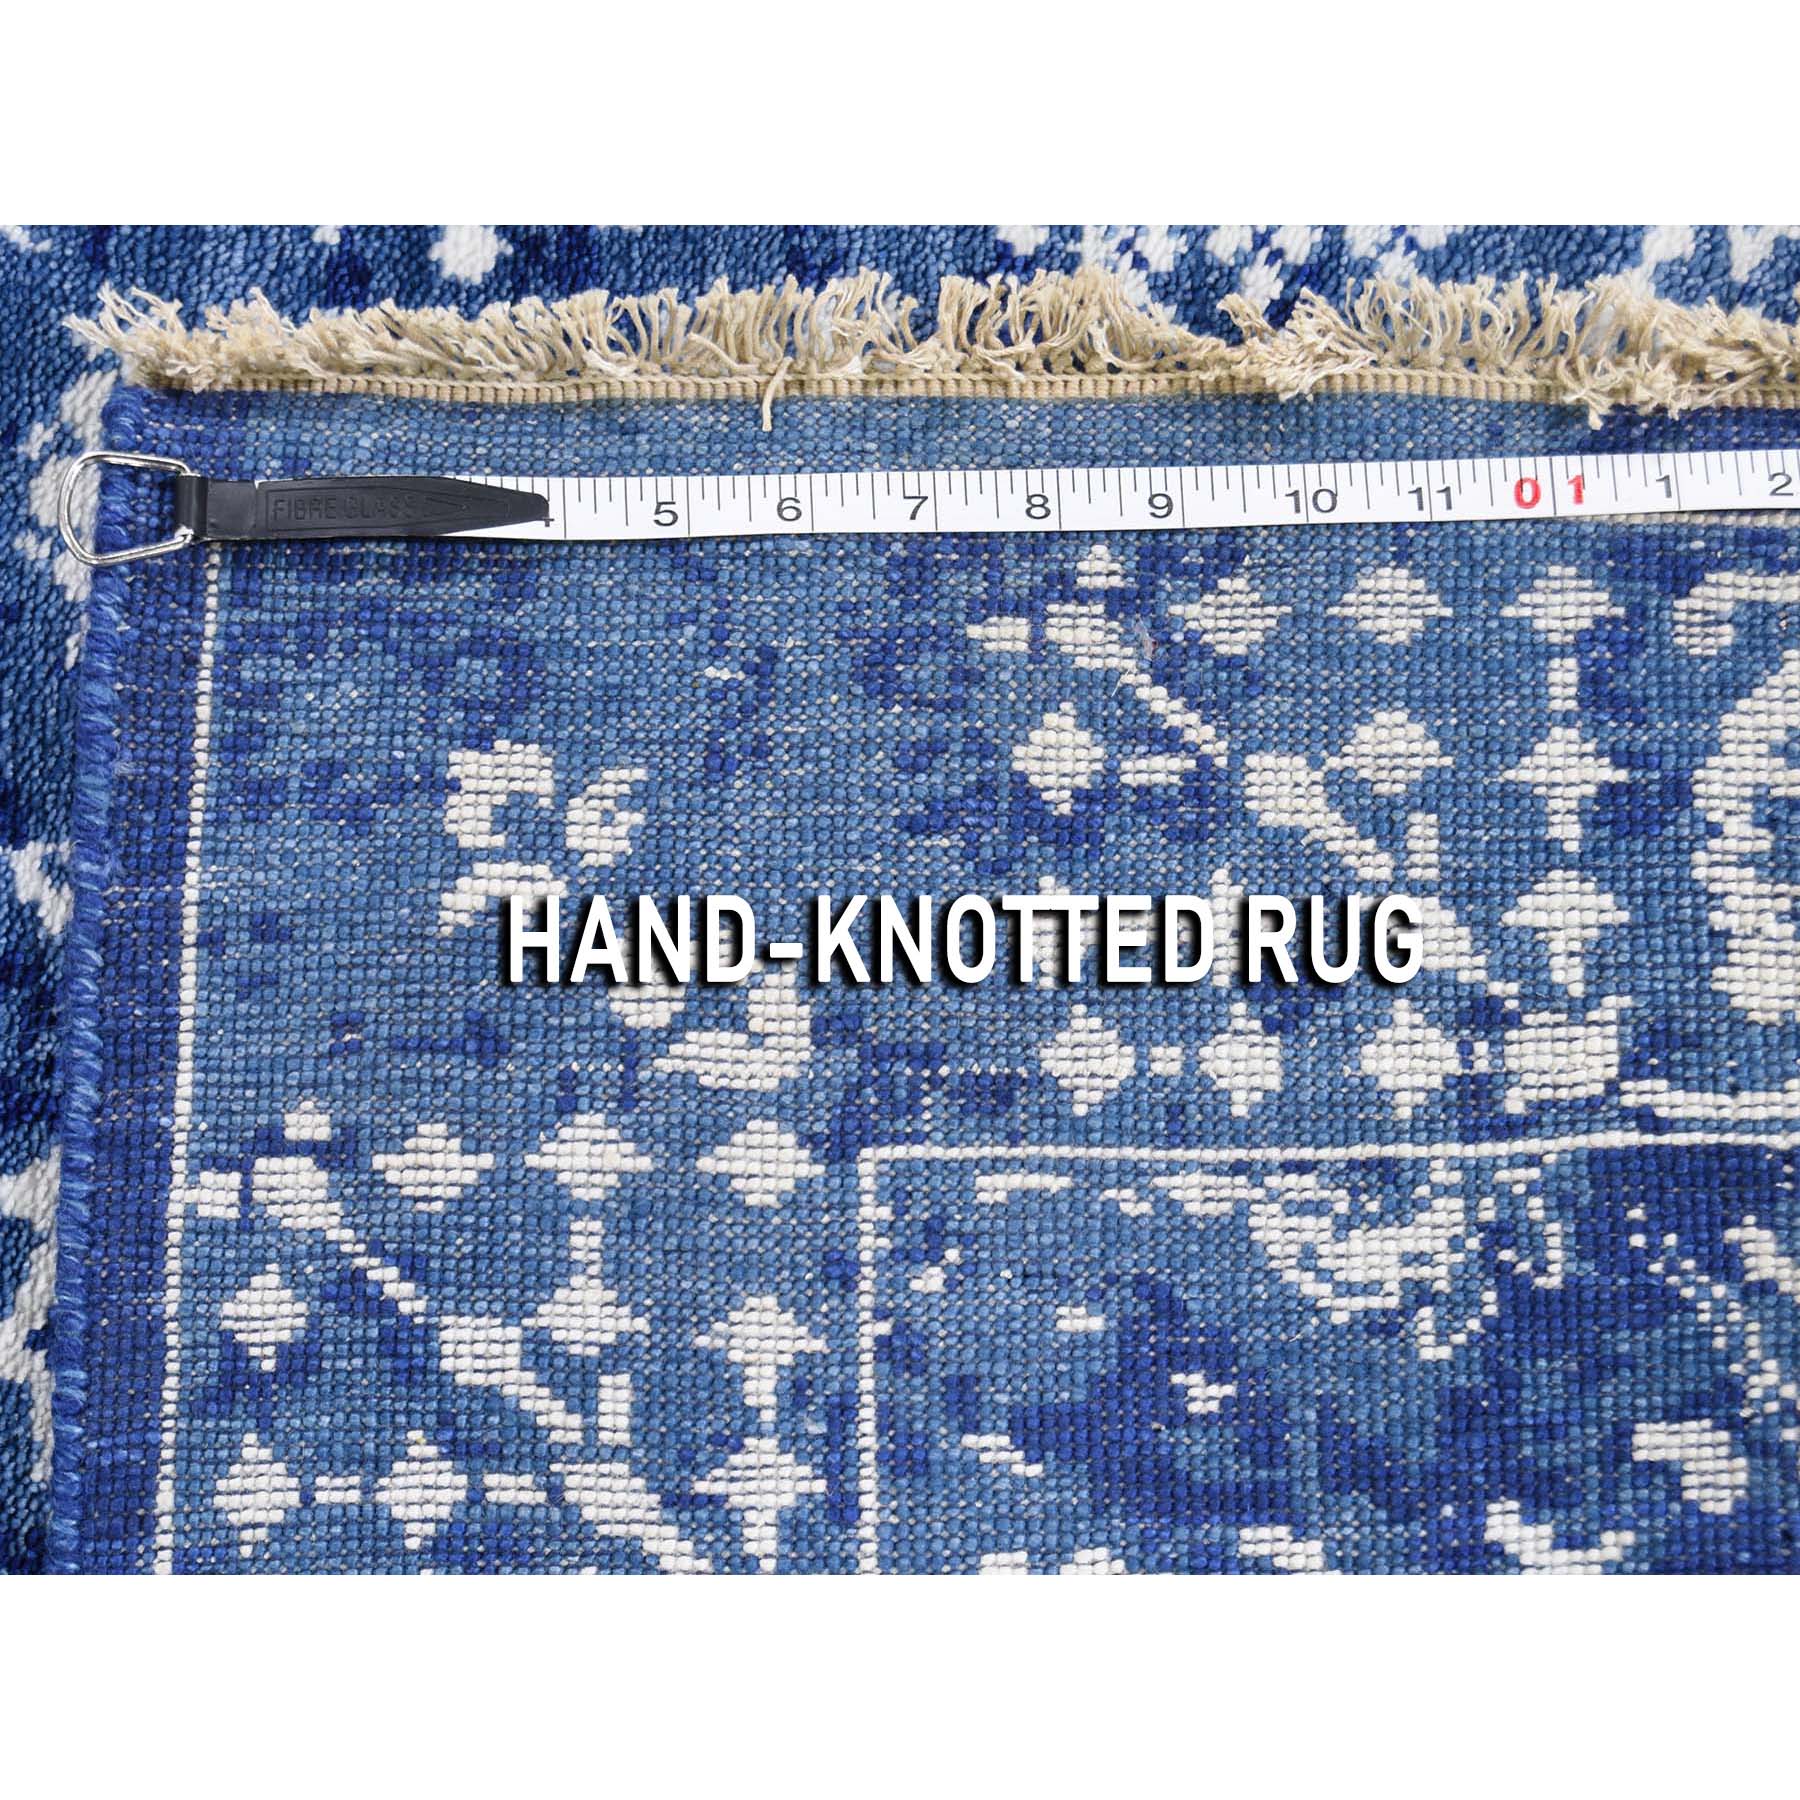 2'8"x6' Hand Woven Wool and Silk Tone on Tone Tabriz Short Runner Oriental Rug 